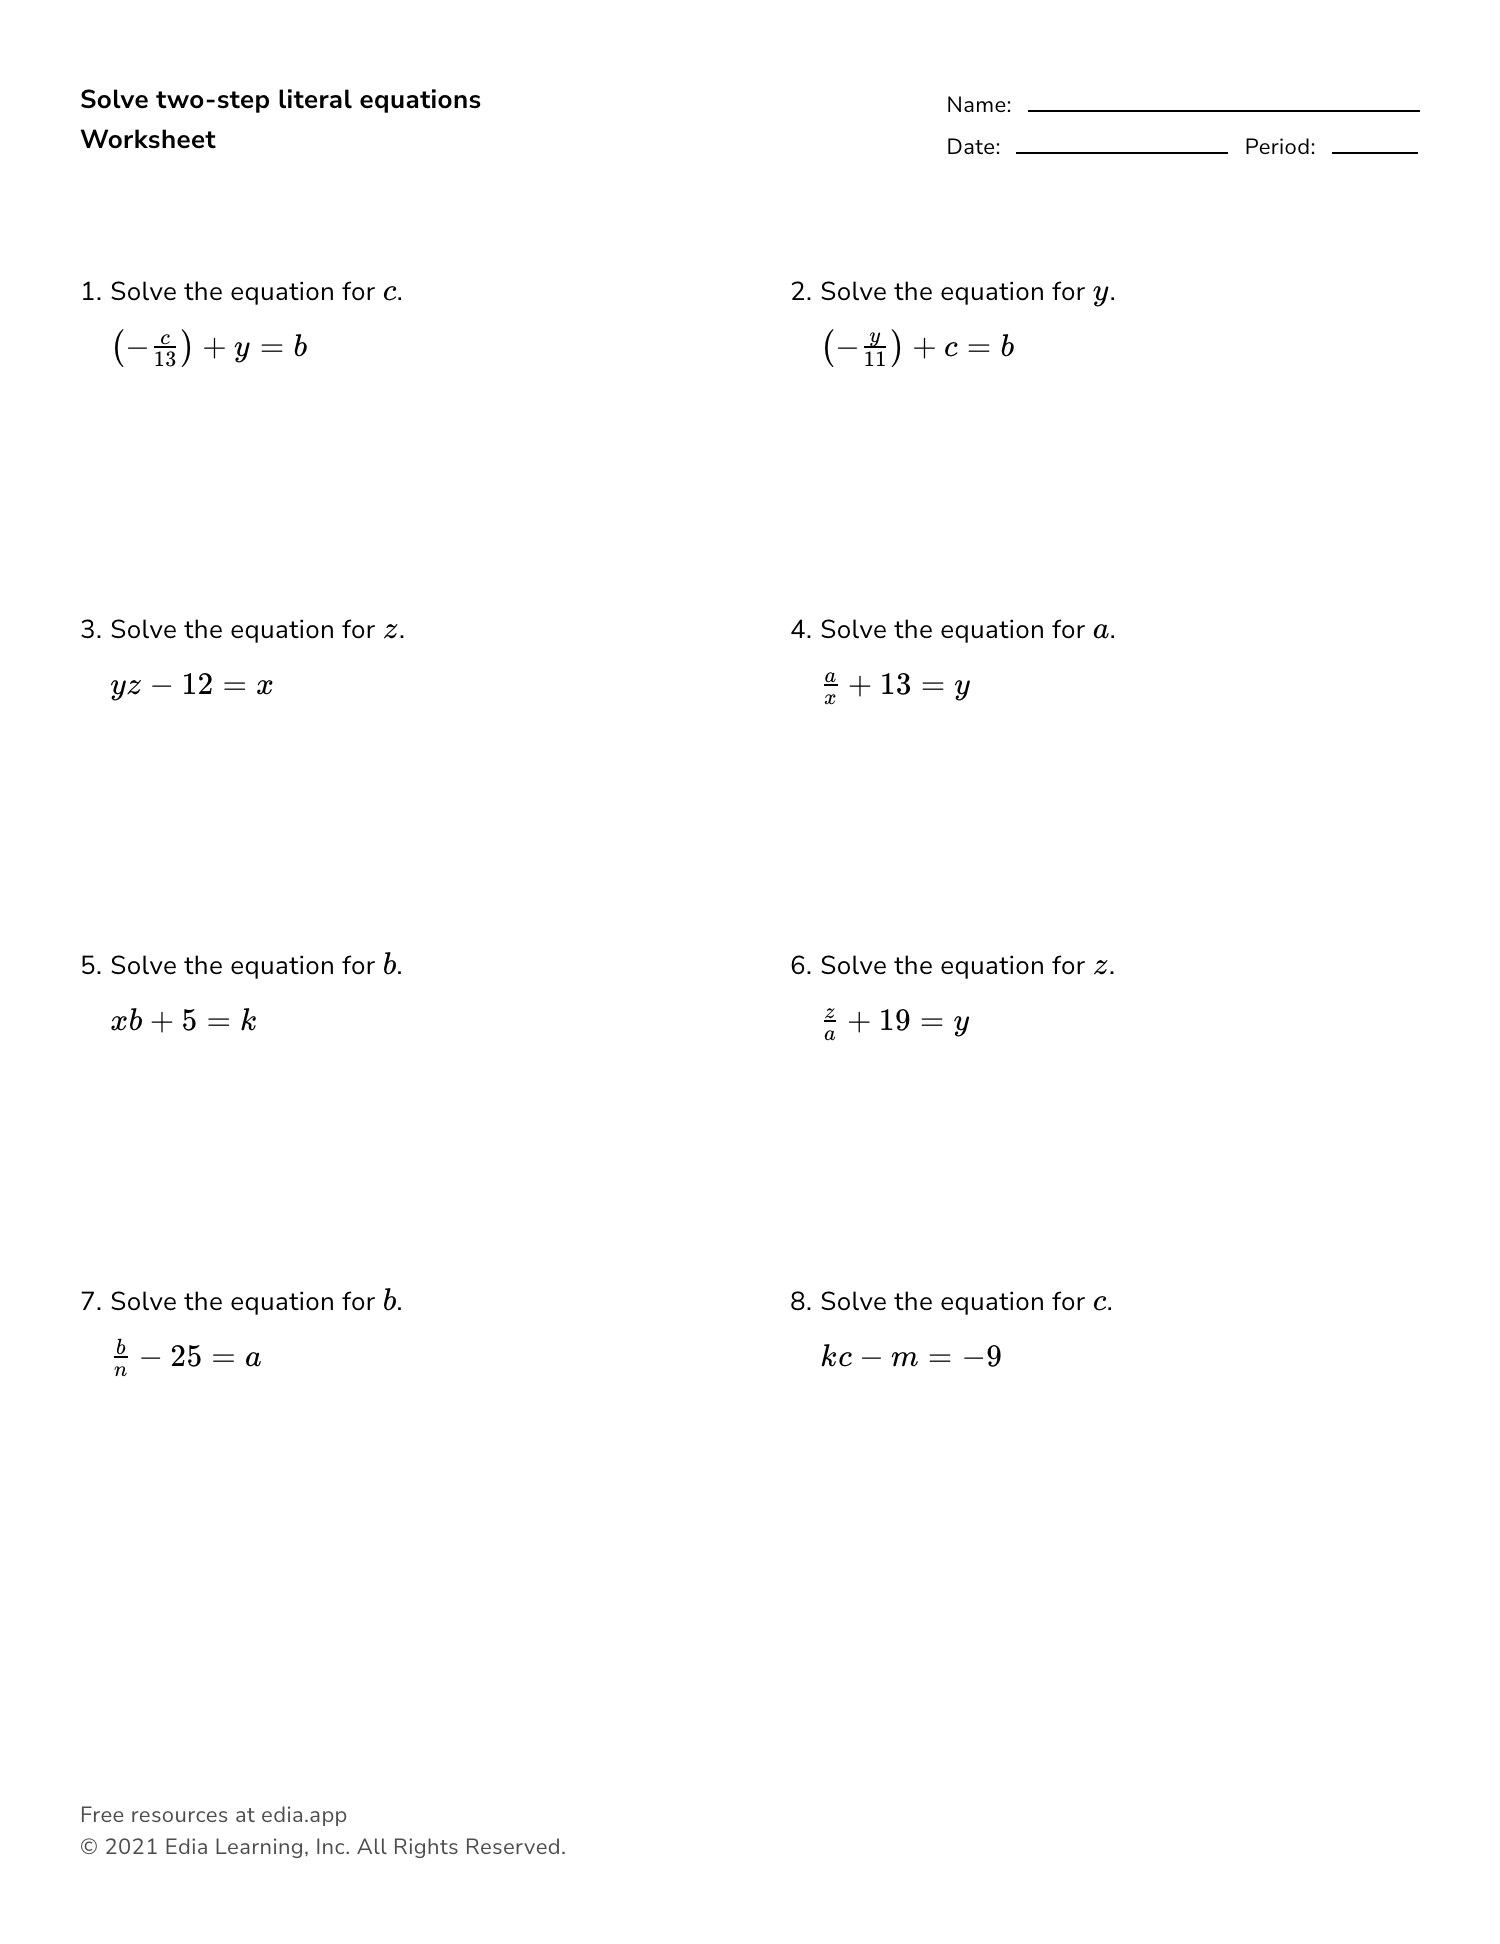 Solve Two-step Literal Equations - Worksheet Regarding Solve Literal Equations Worksheet